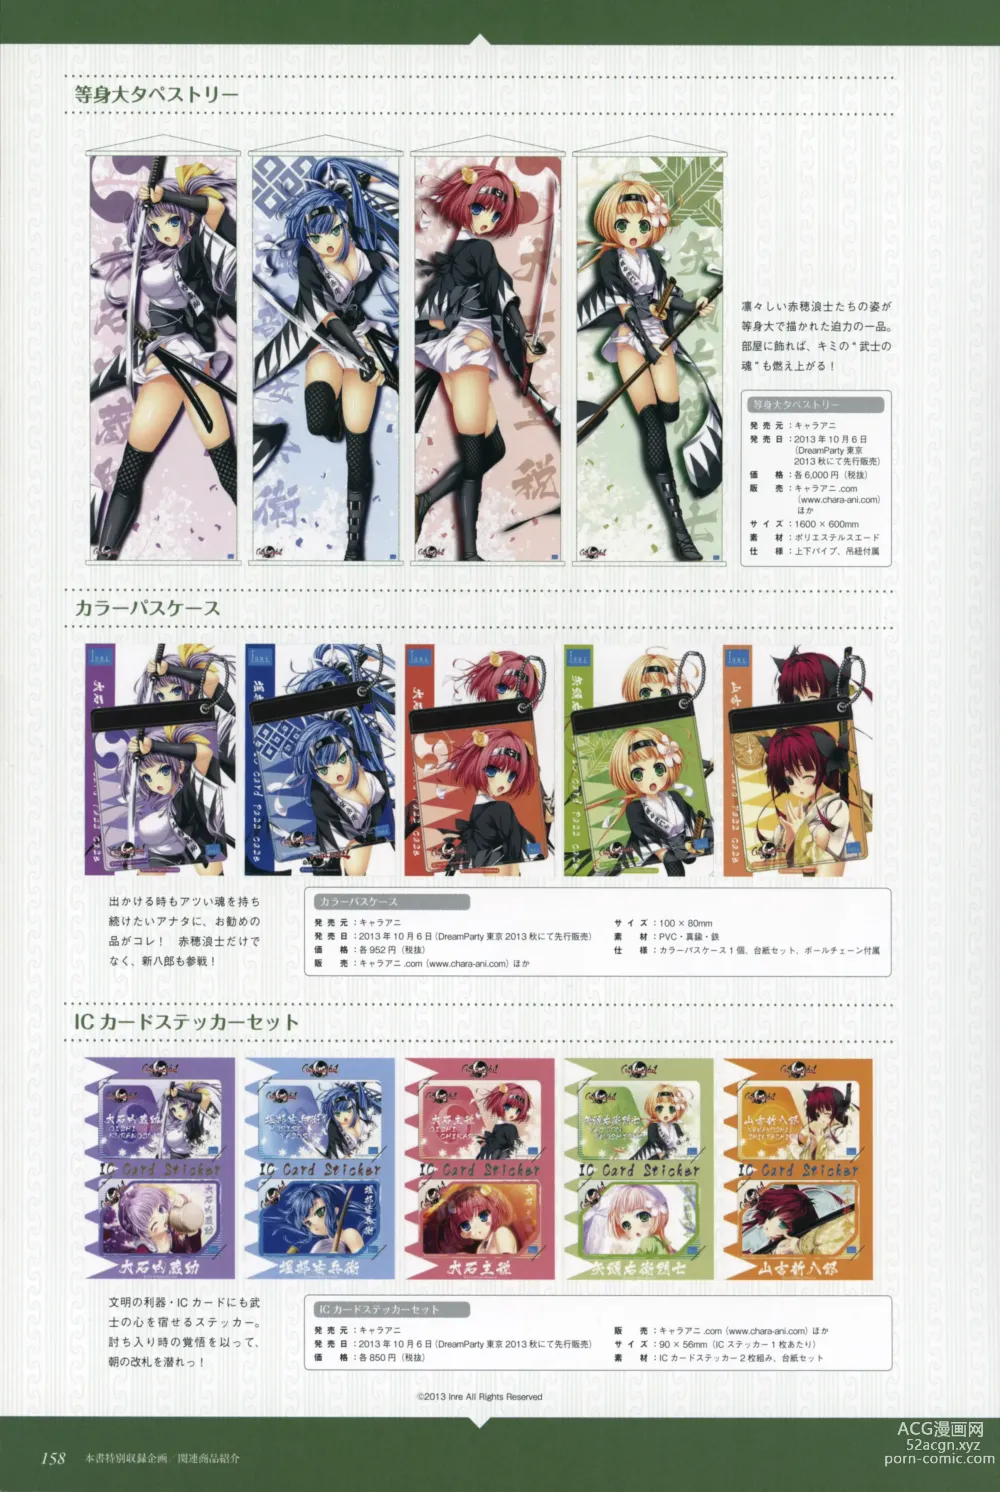 Page 160 of manga ChuSinGura 46+1 Official Visual Fan Book